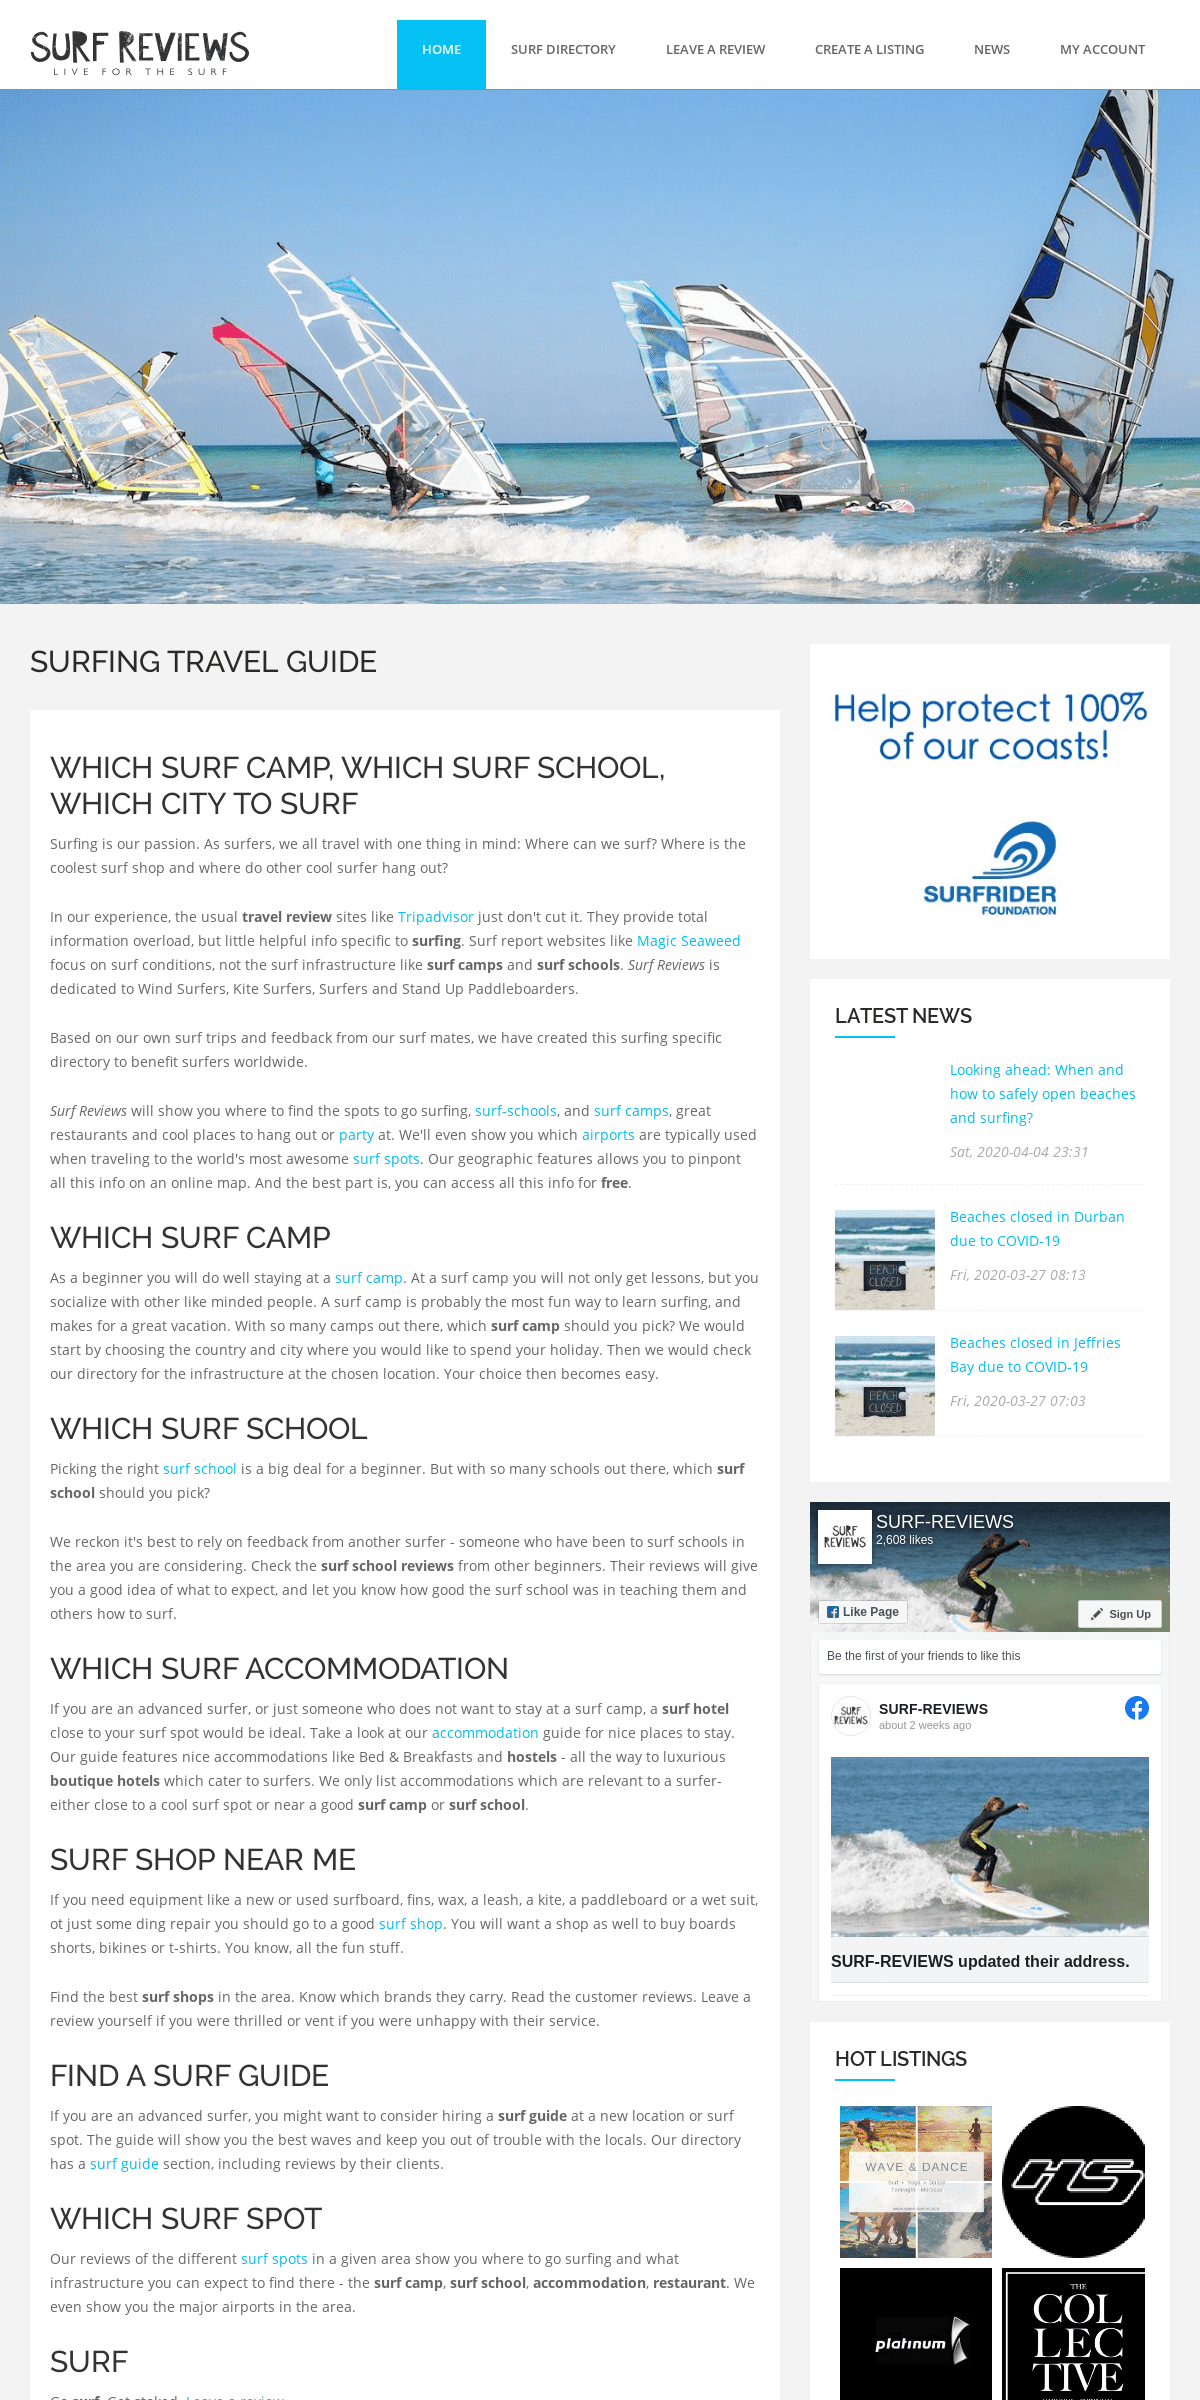 A complete backup of surf-reviews.com